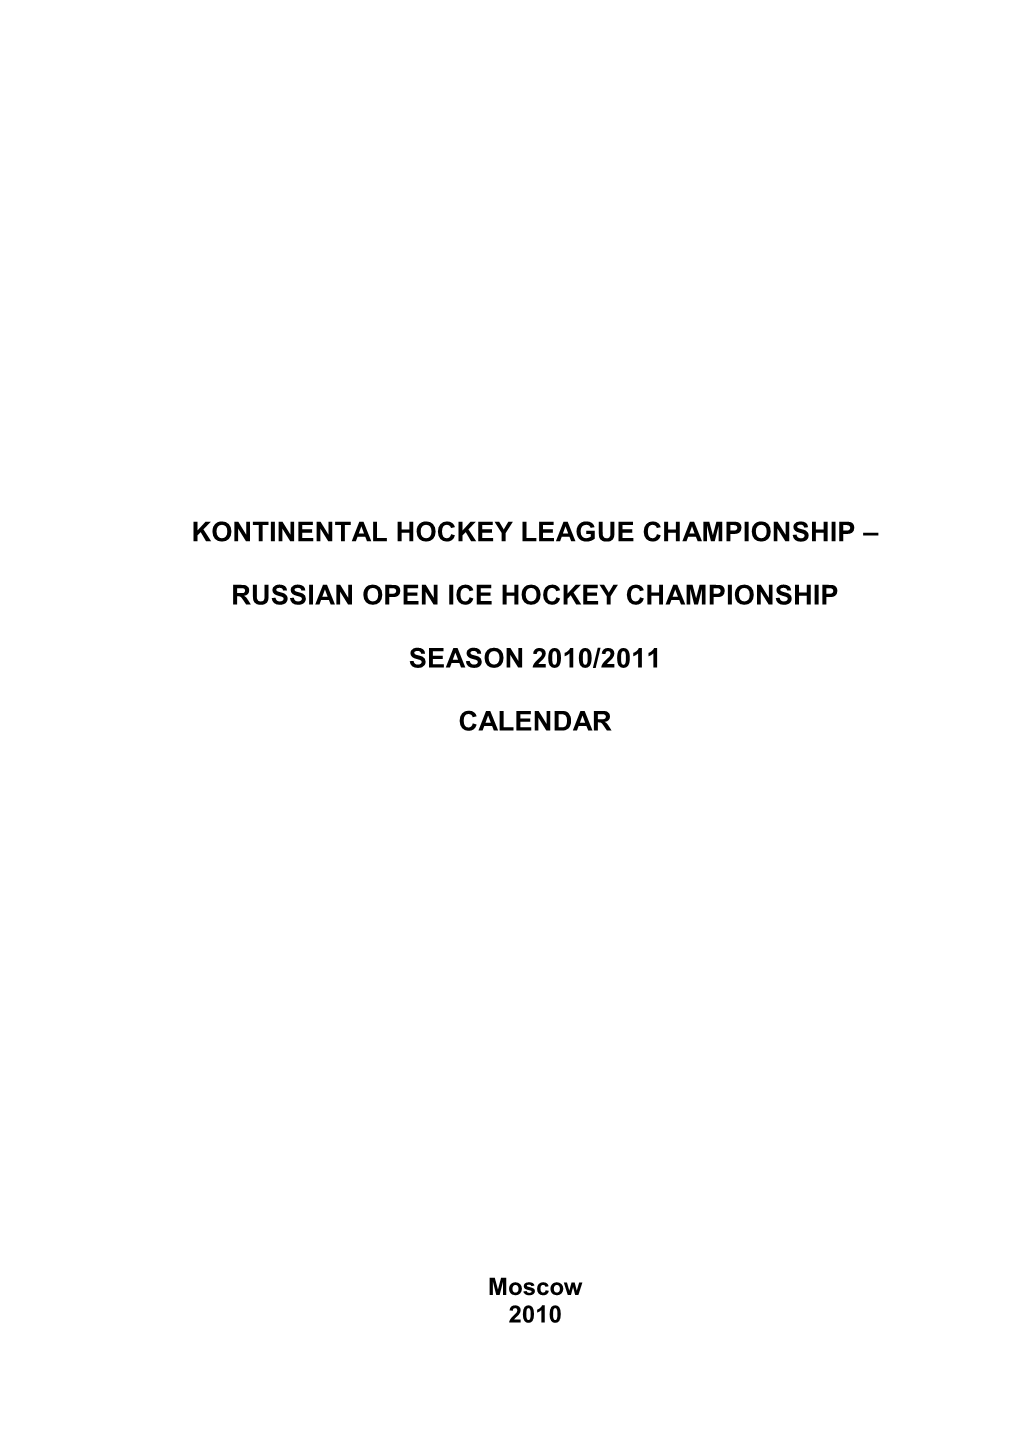 Russian Open Ice Hockey Championship Season